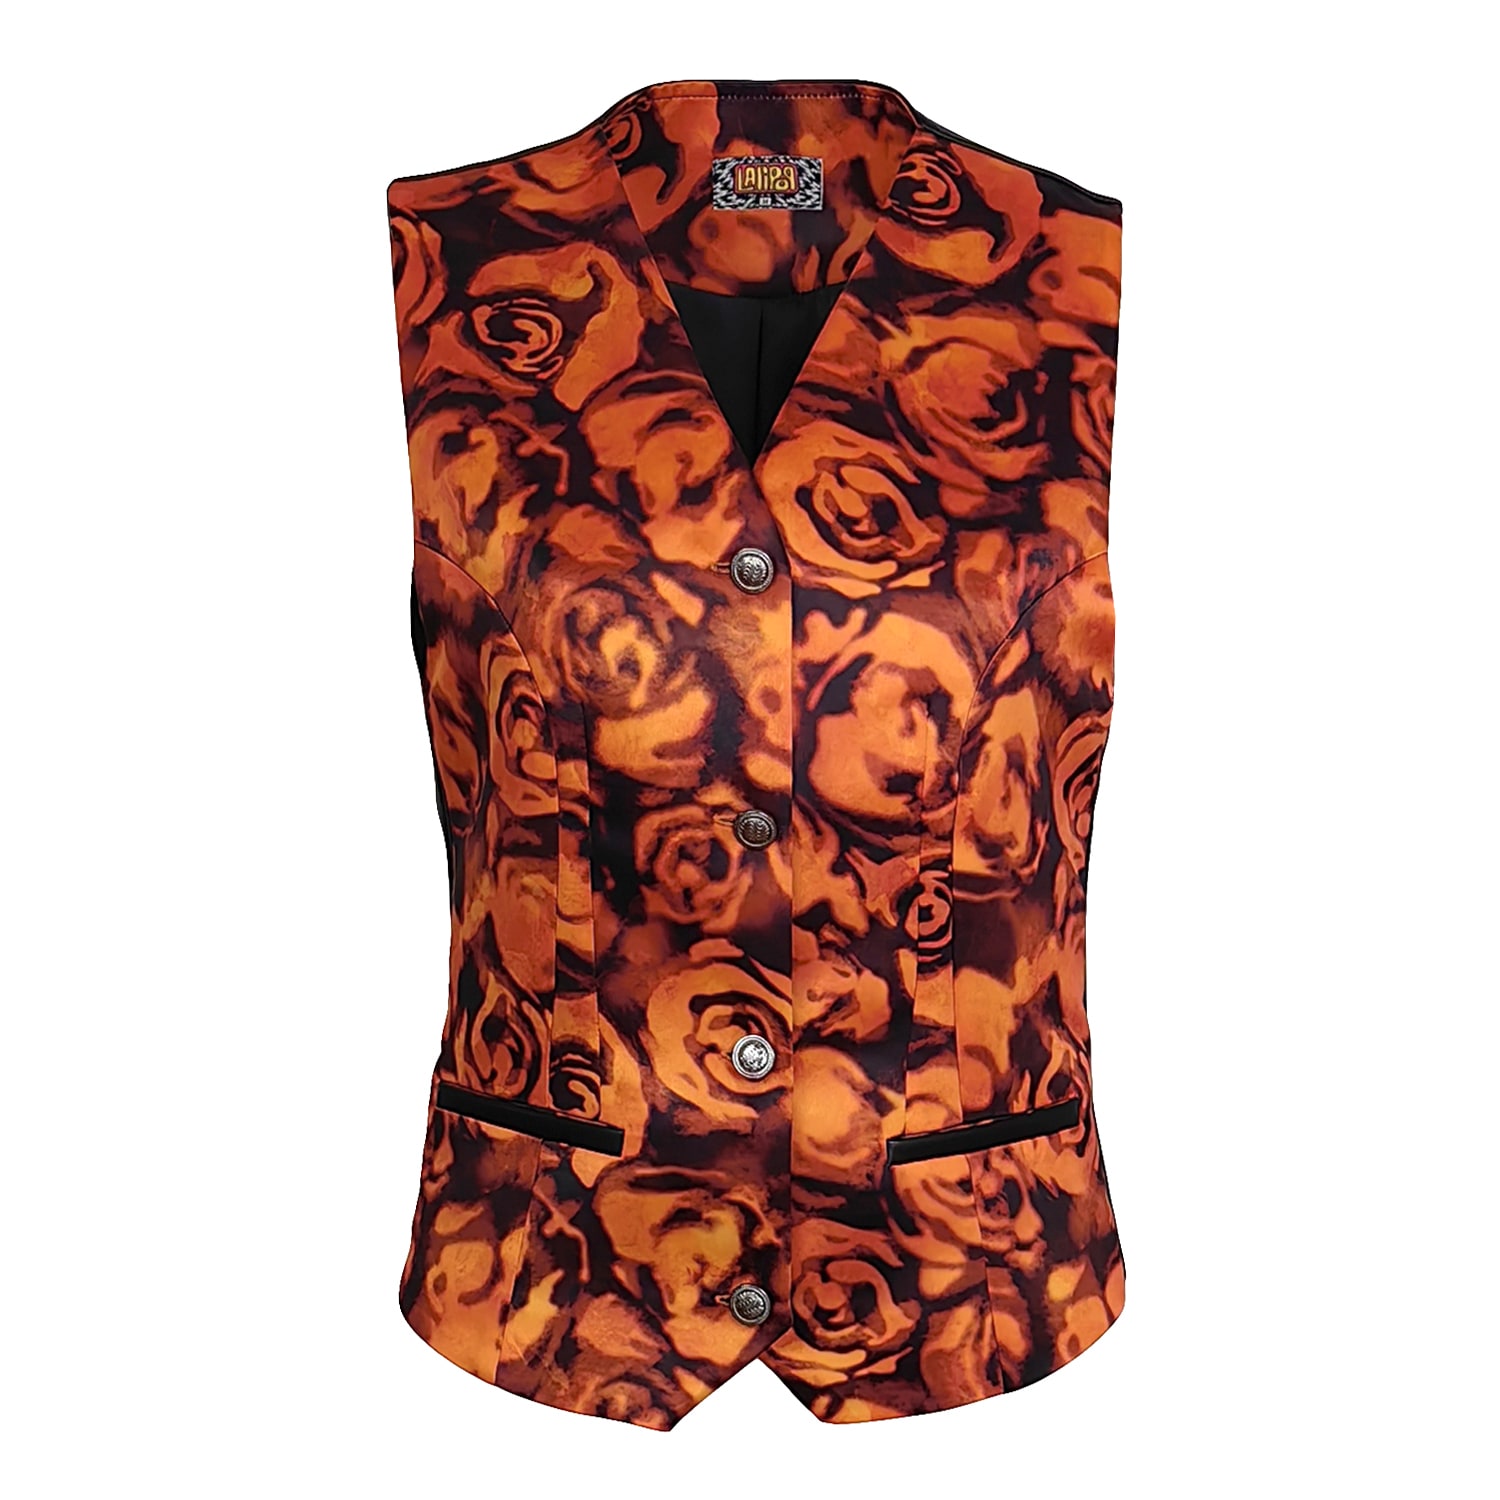 Lalipop Design Women's Floral Digital Print & Black Vegan Leather Vest